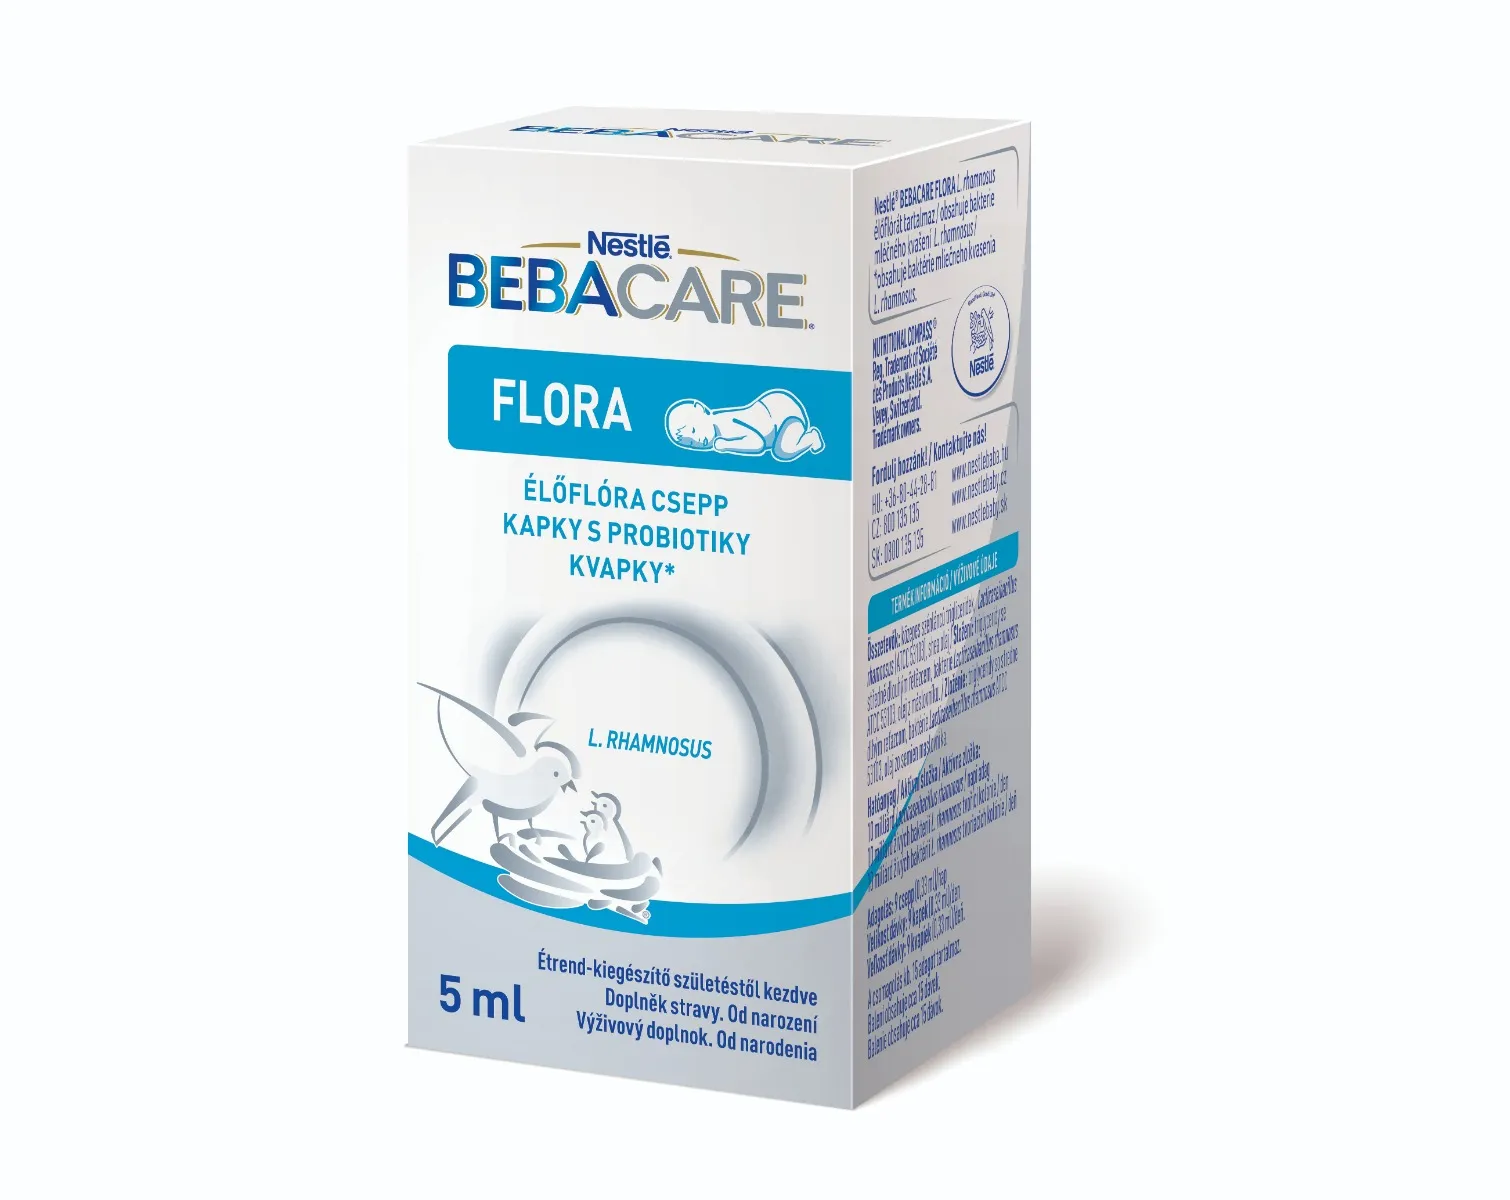 BEBACARE Flora kapky s probiotiky 5 ml